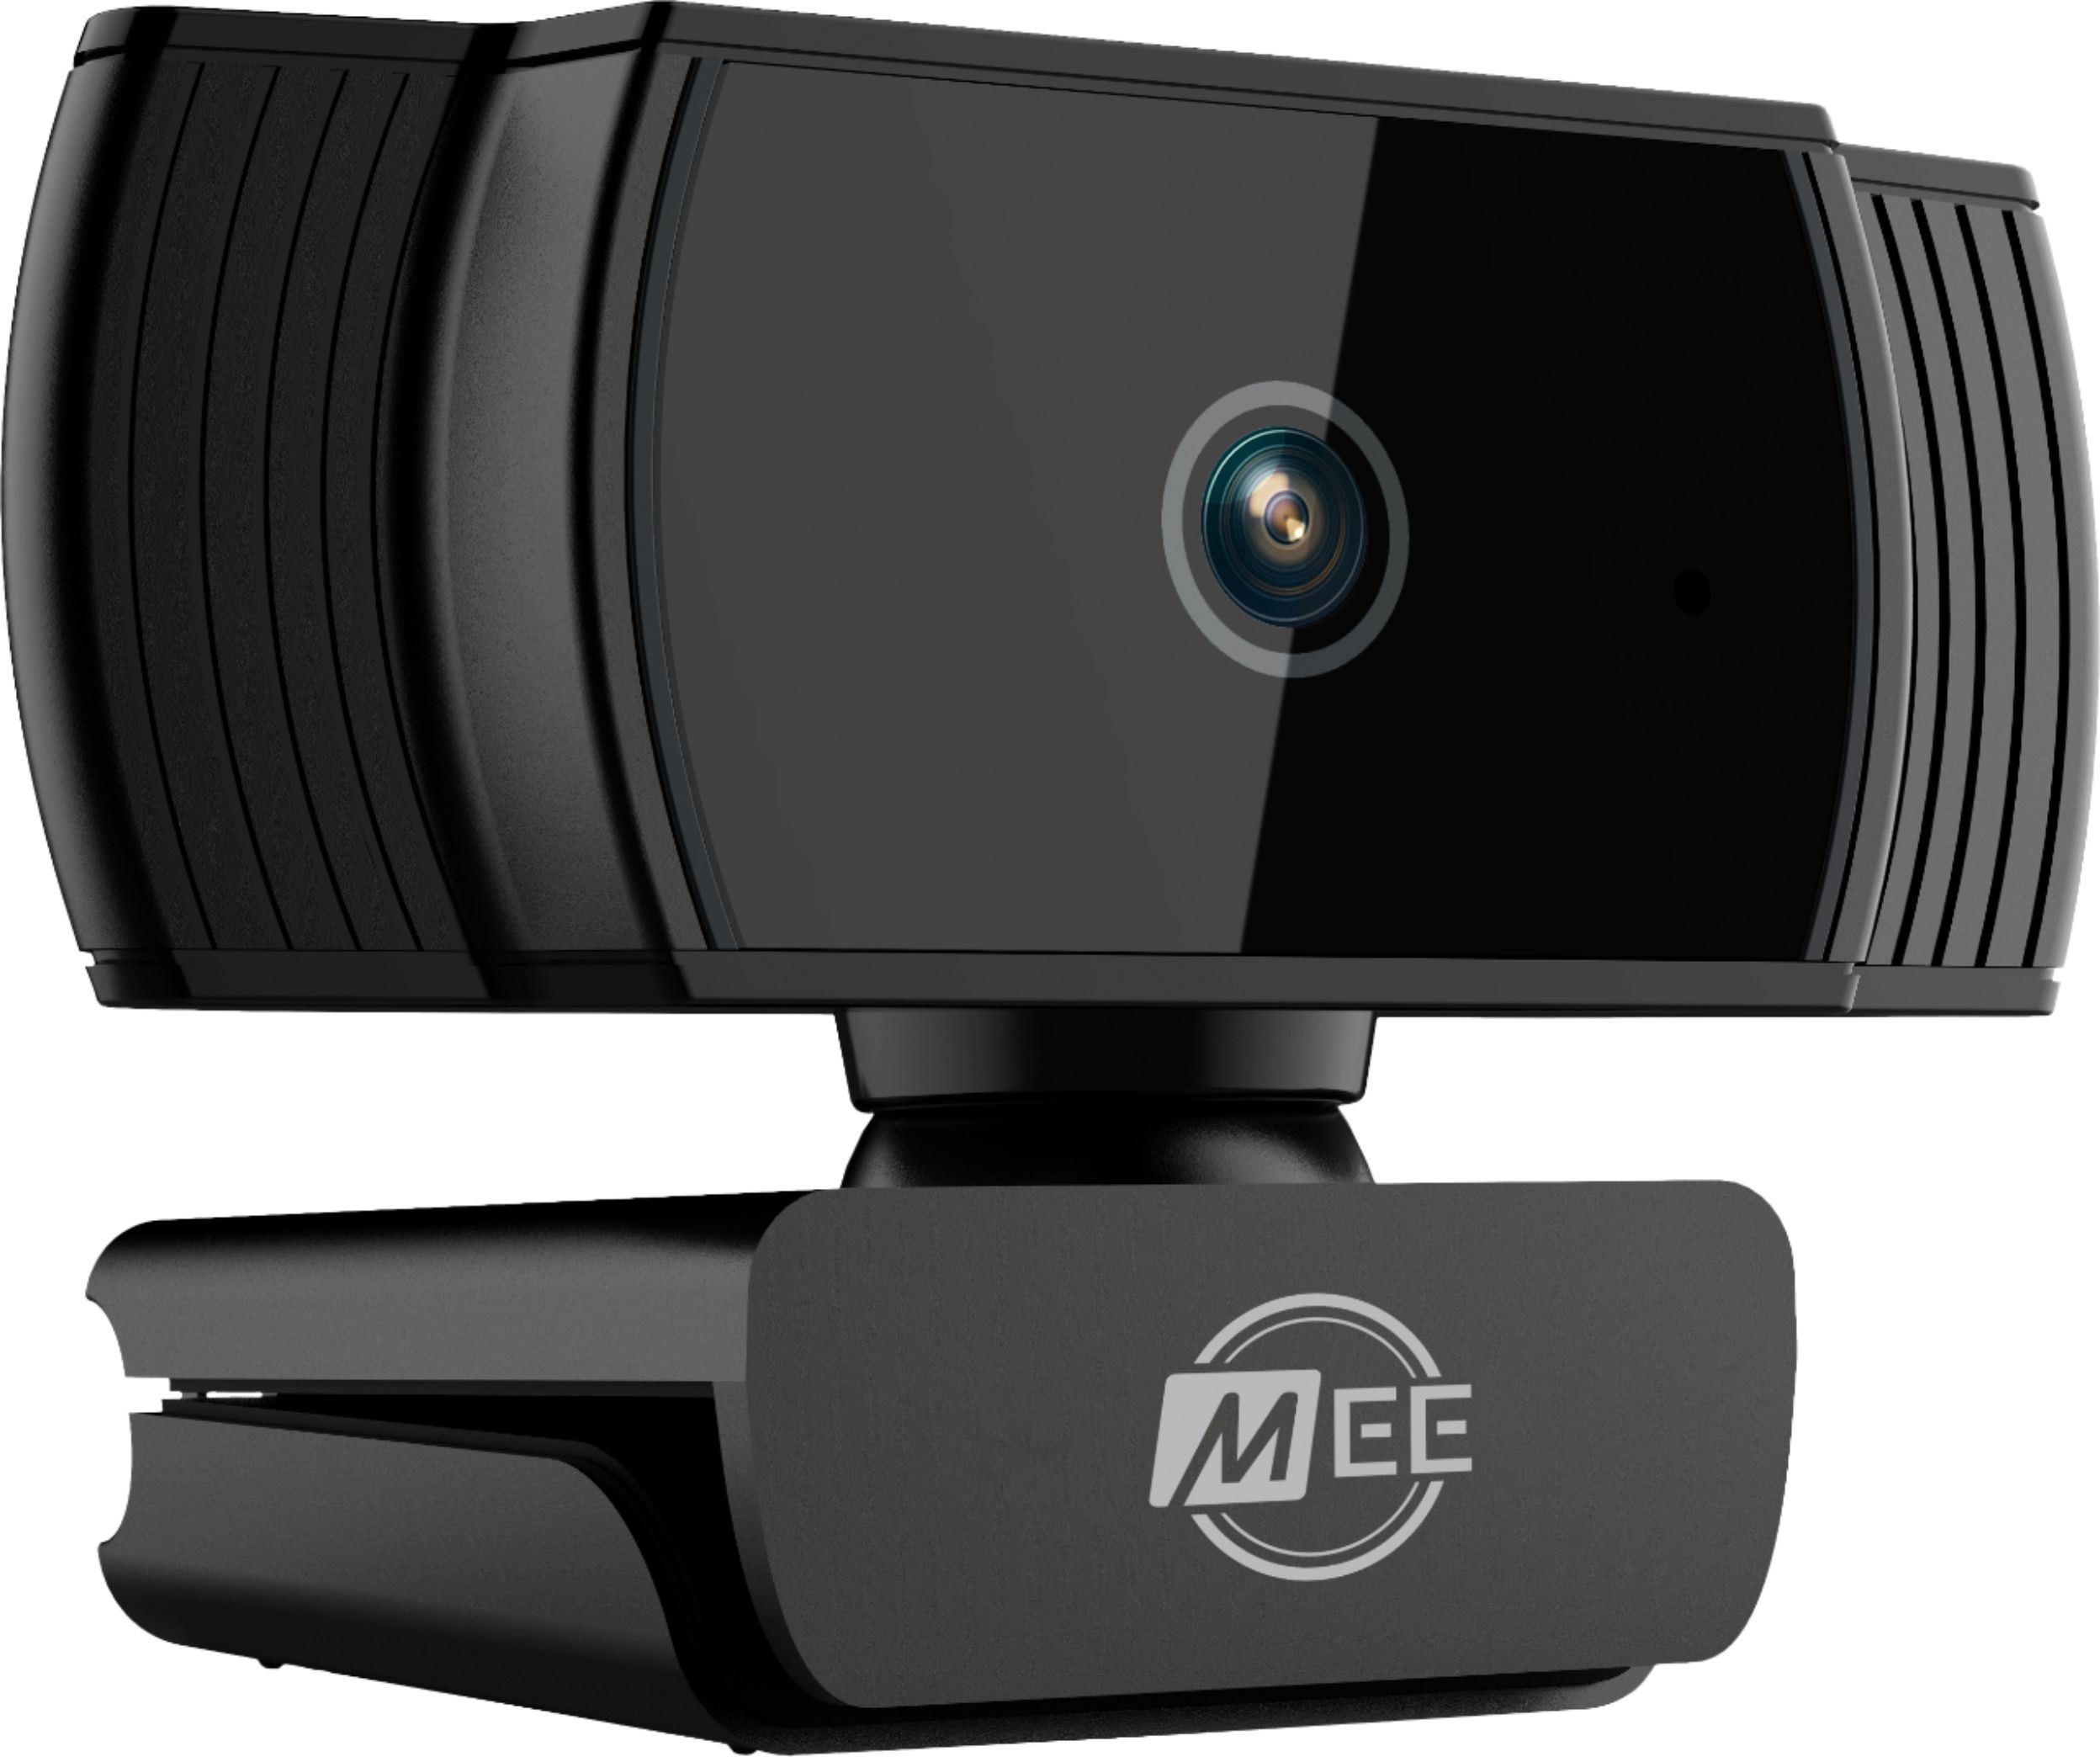 Left View: MEE audio - 1920 x 1080 Webcam with Autofocus